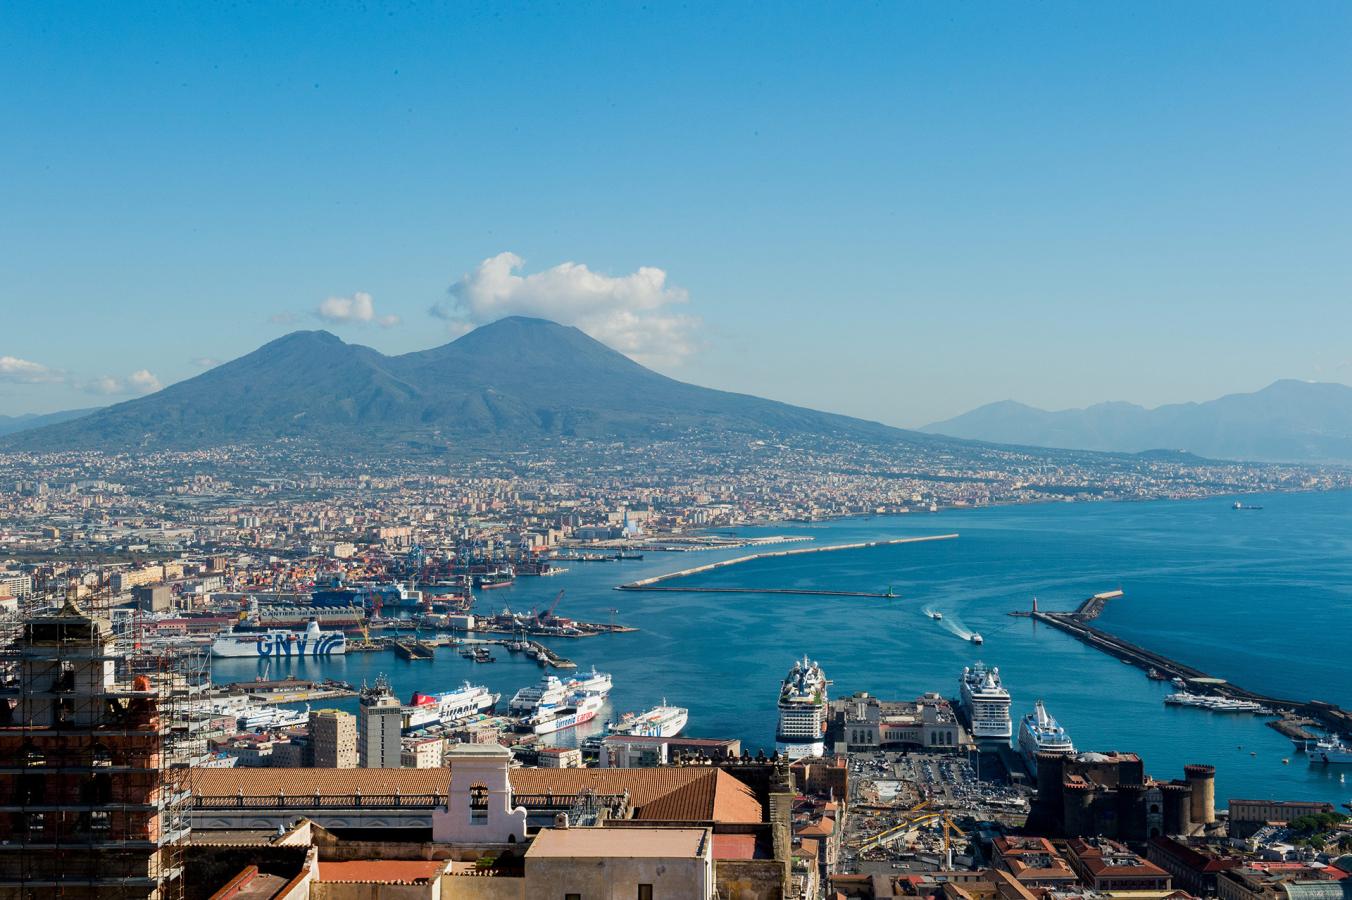 Naples-Pompeii-Mount Vesuvius (price starting from 400€)-1